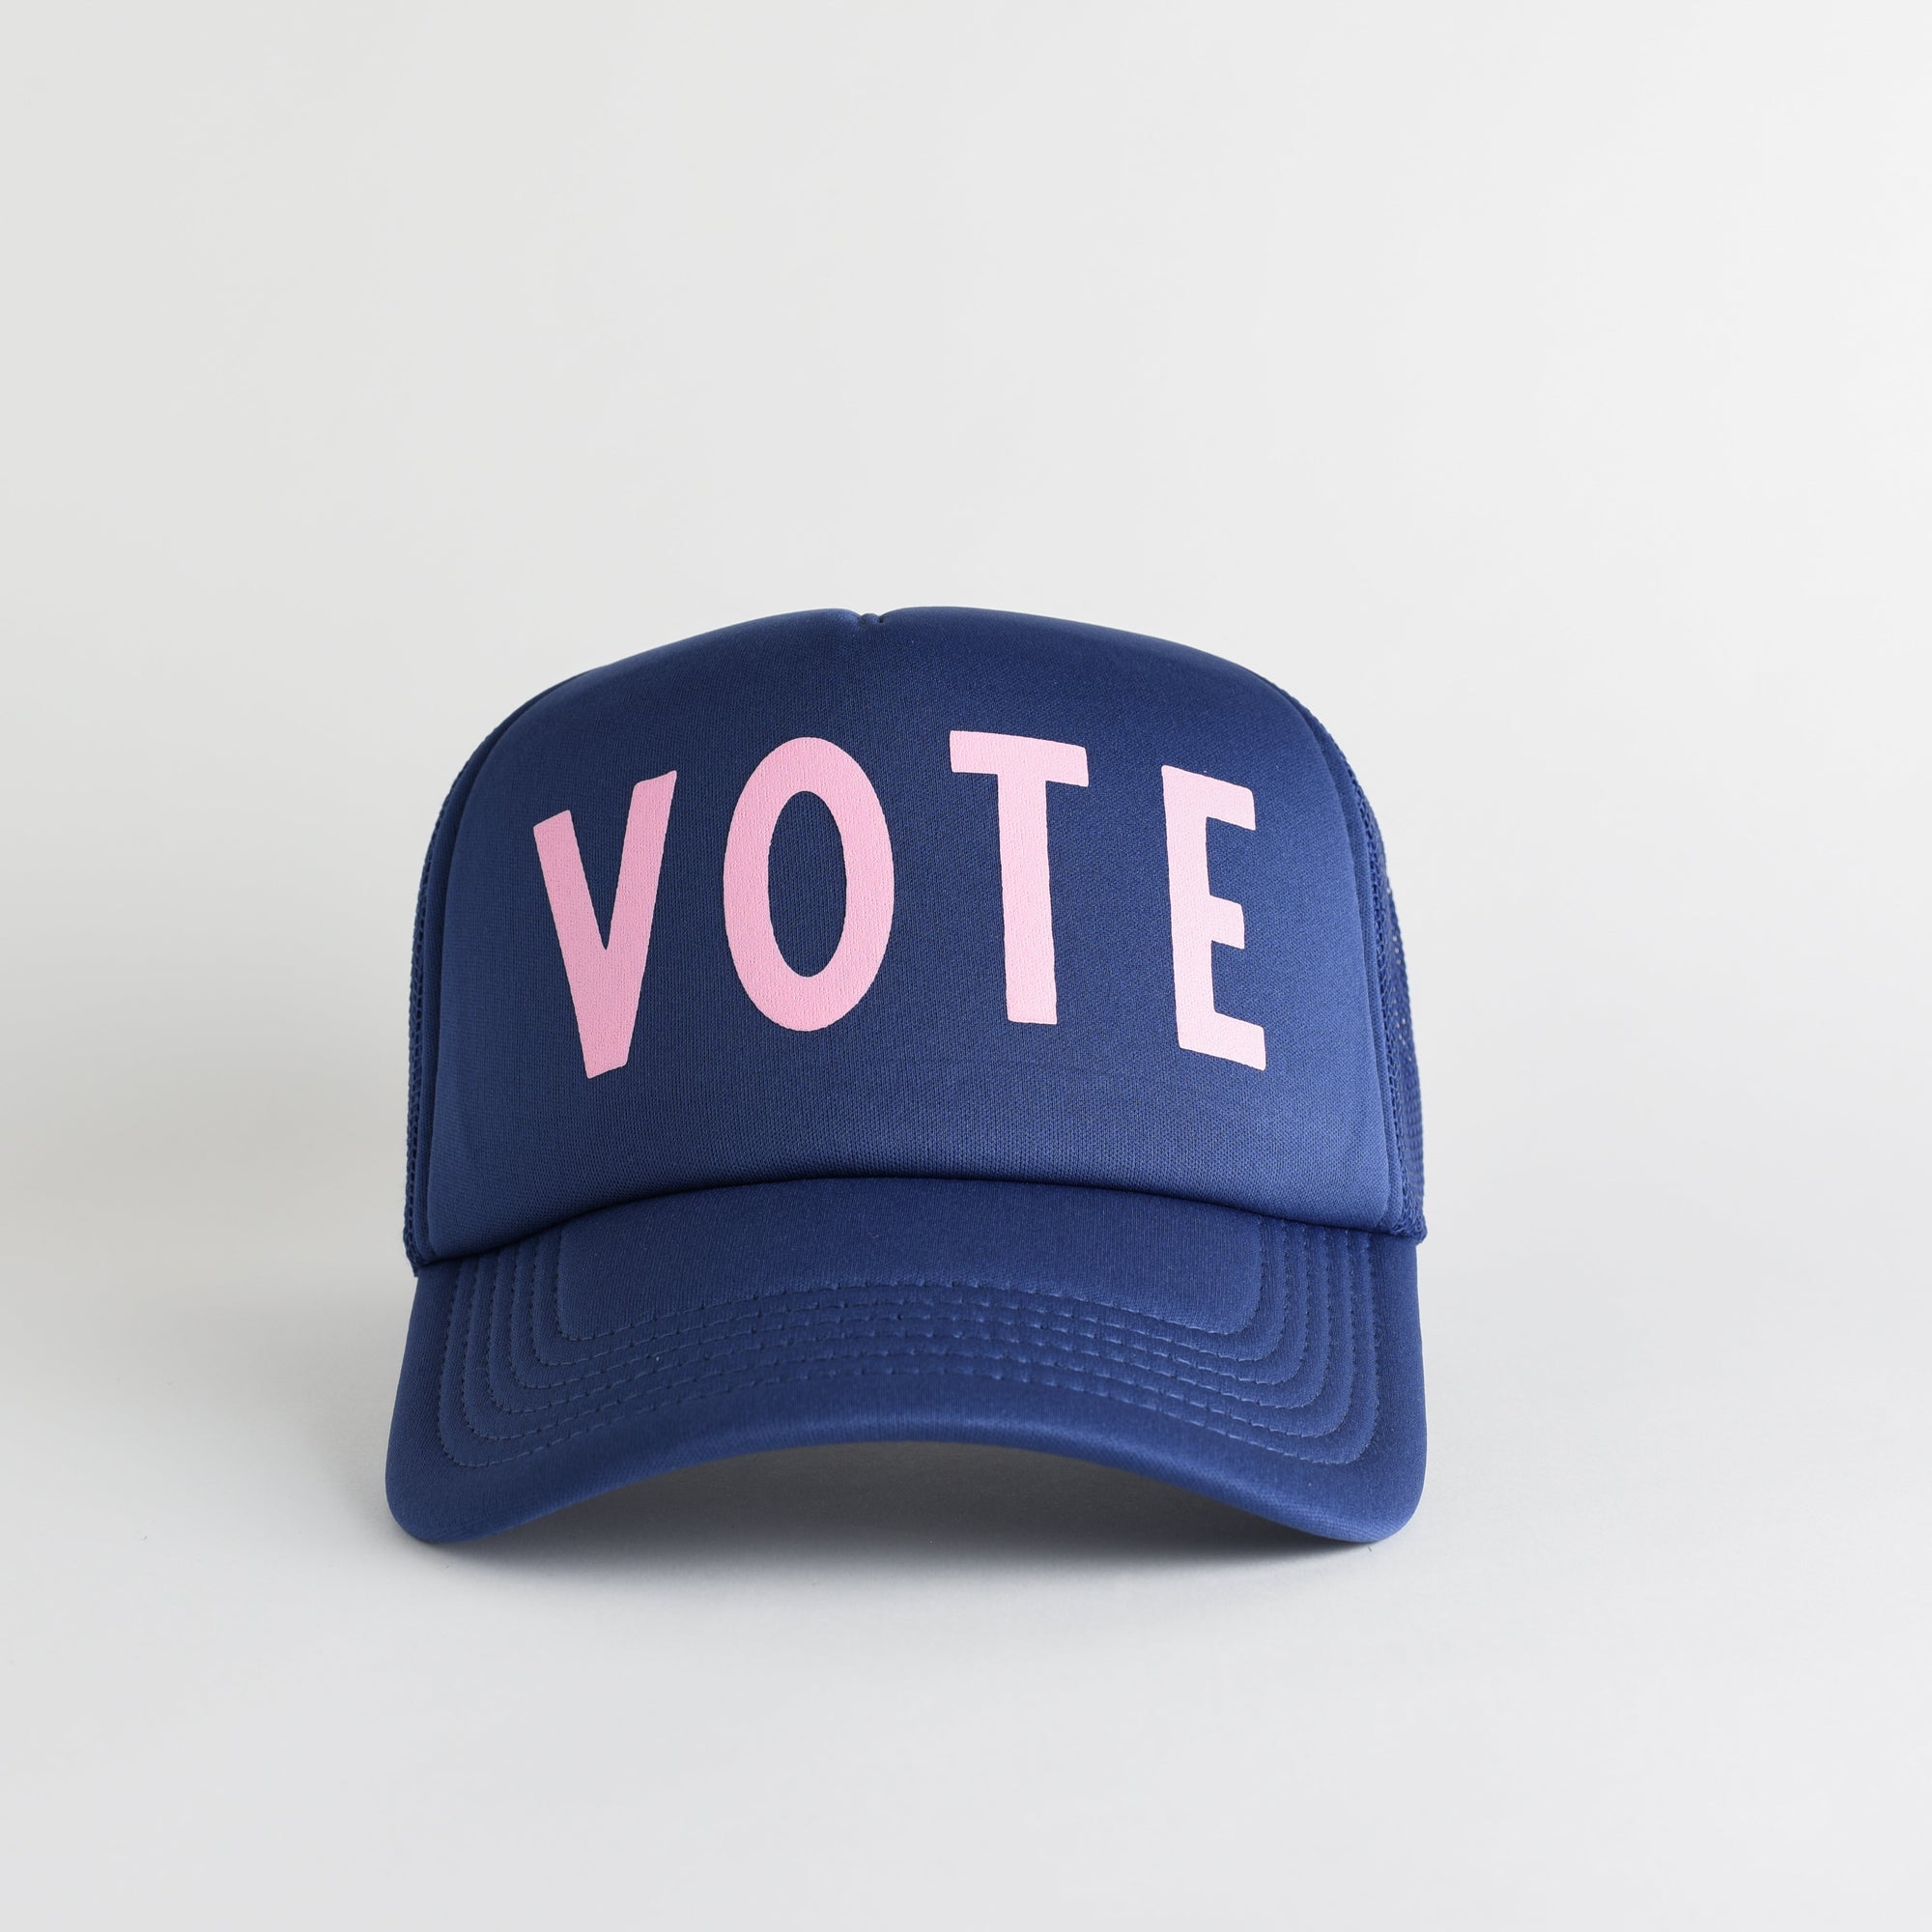 Vote Recycled Trucker Hat - cobalt